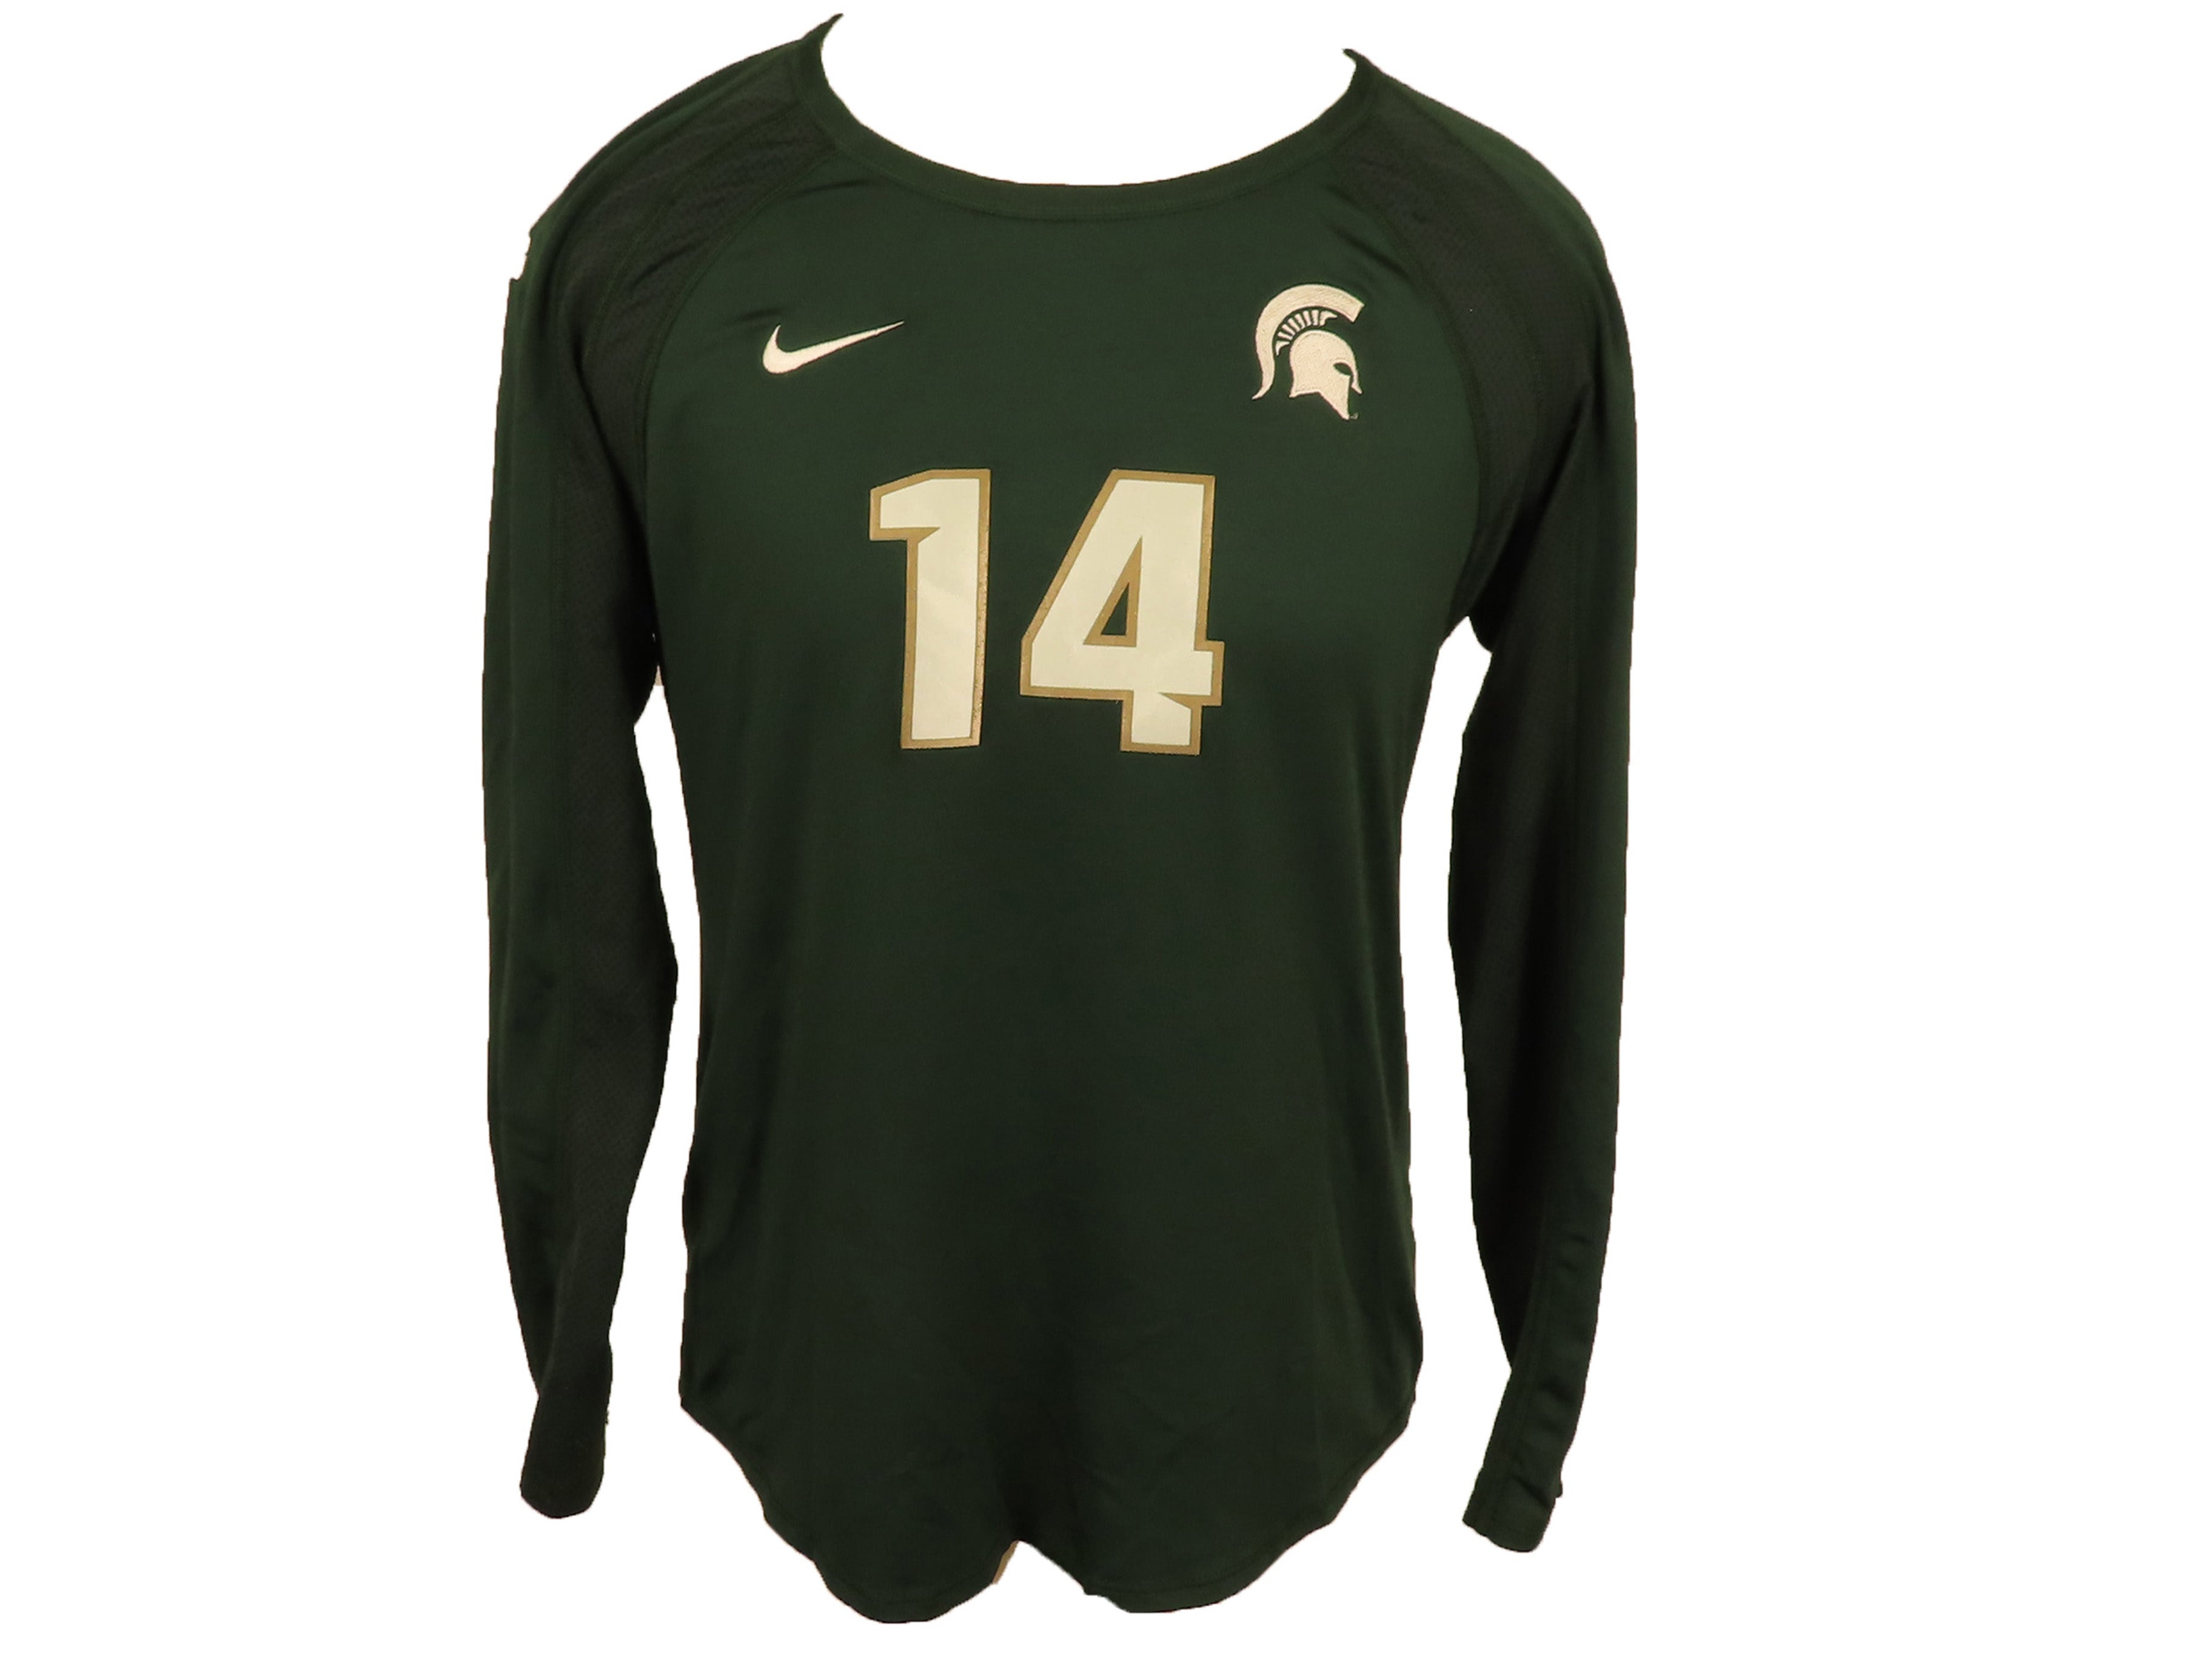 Nike Green Long Sleeve MSU Volleyball Jersey #14 Women's Size XL